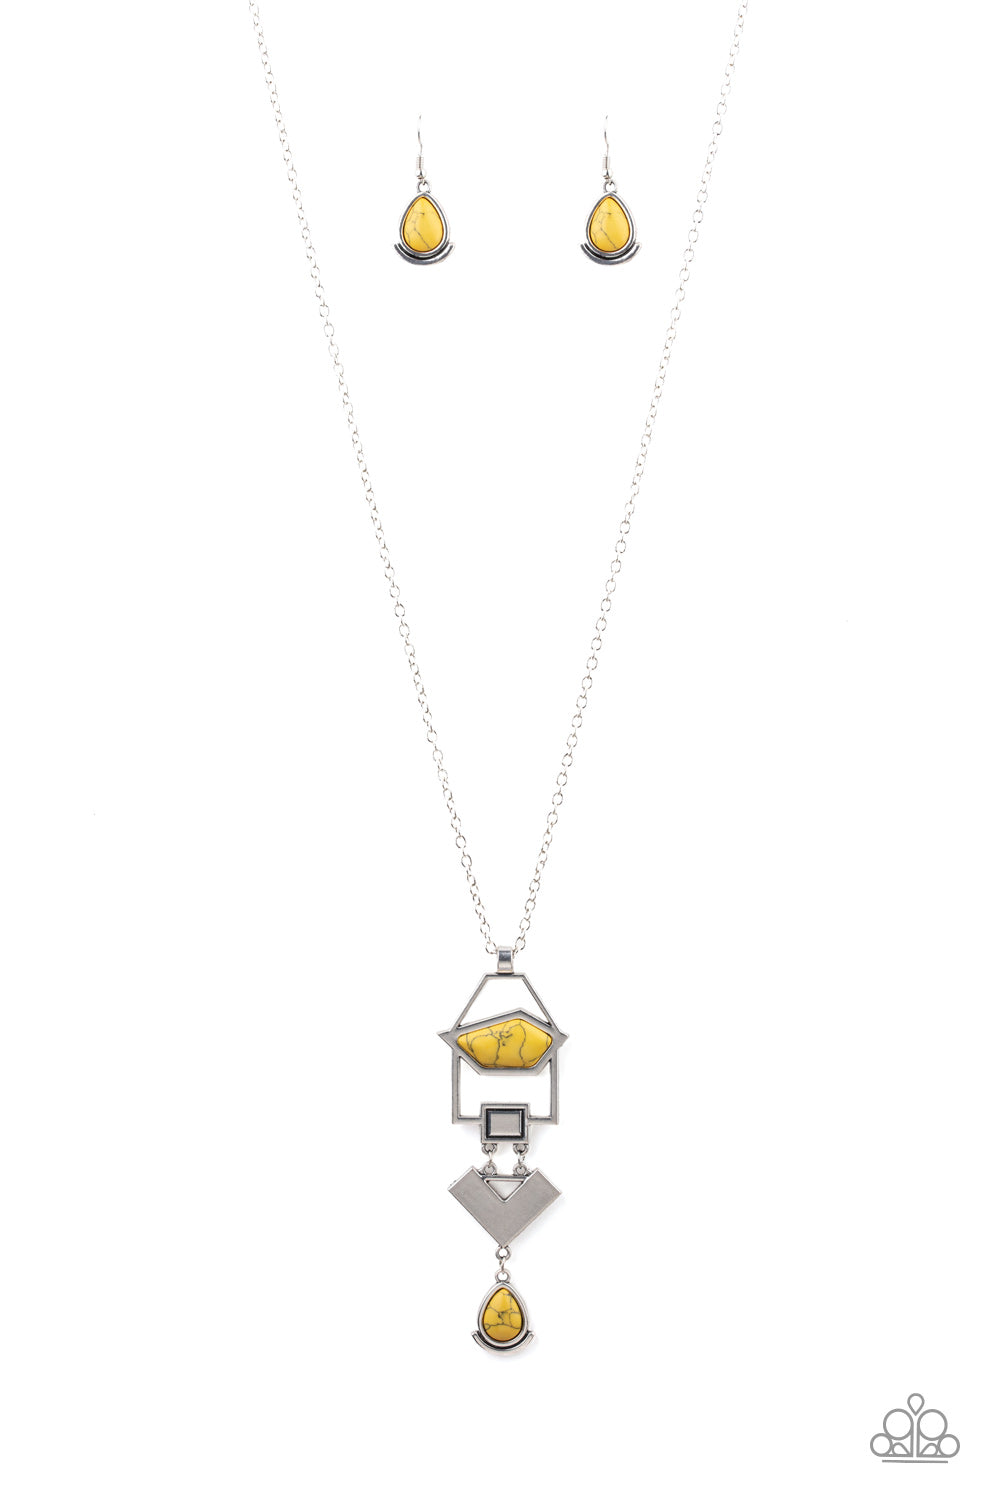 Desert Artisan Yellow Necklace - Daria's Blings N Things